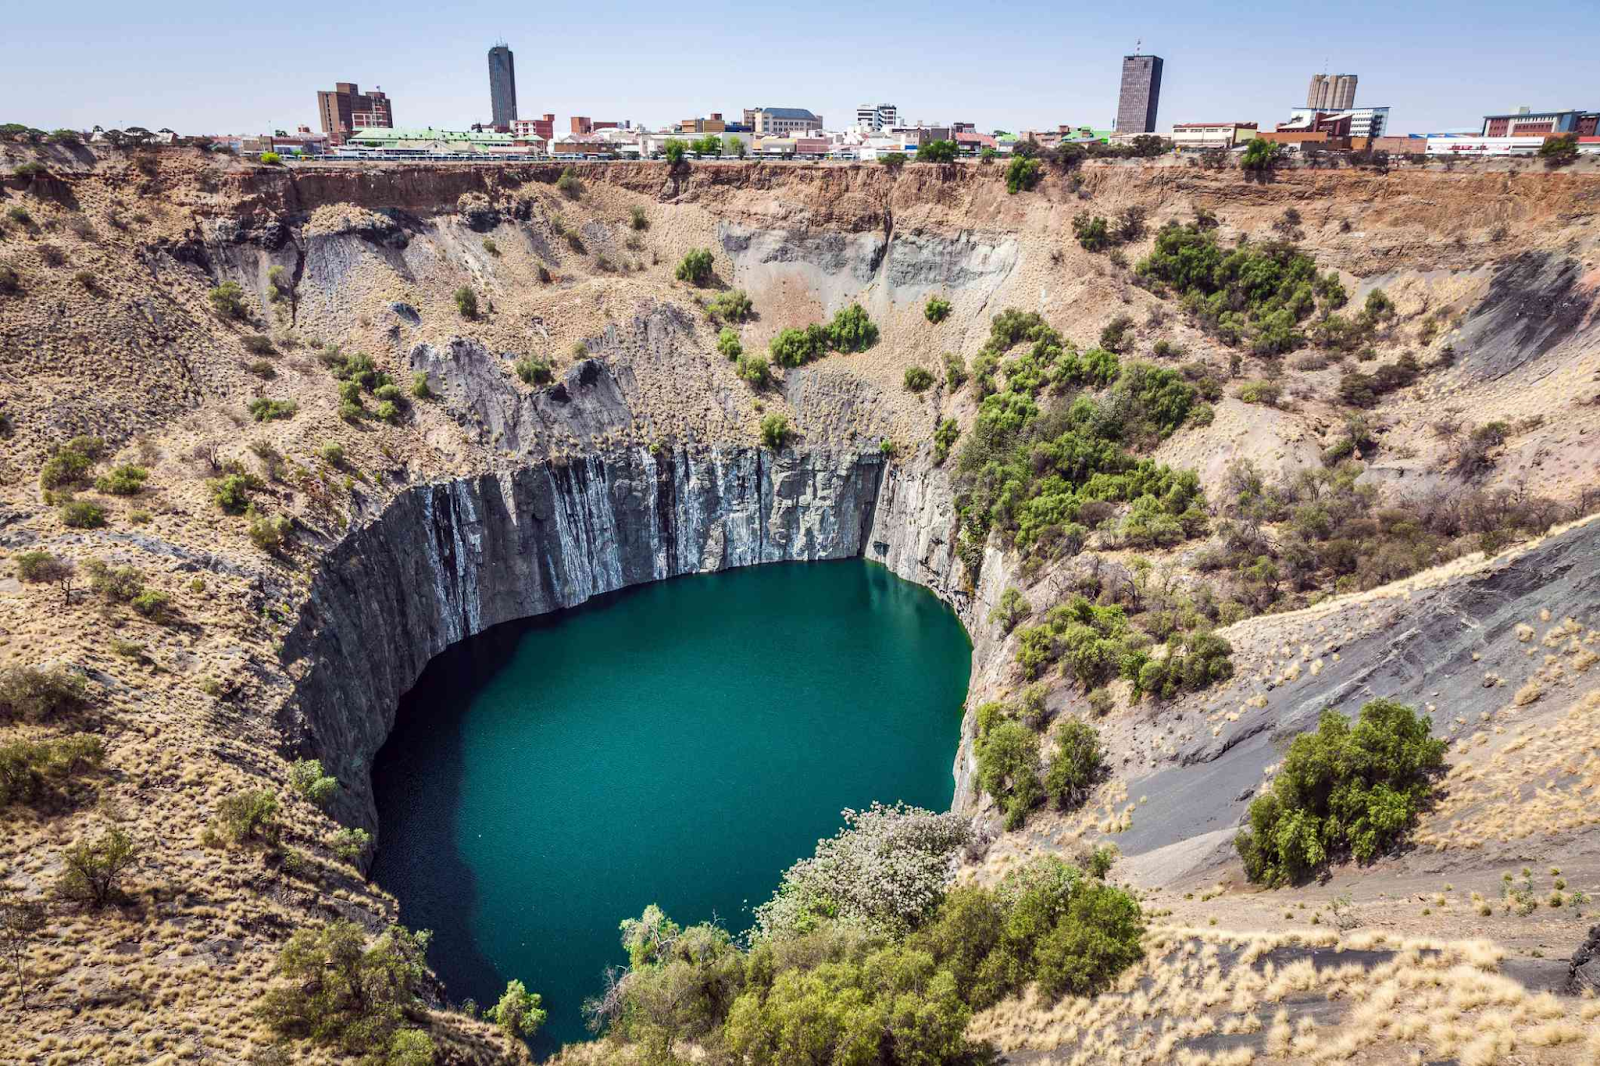 The Big Hole - in Kimberley